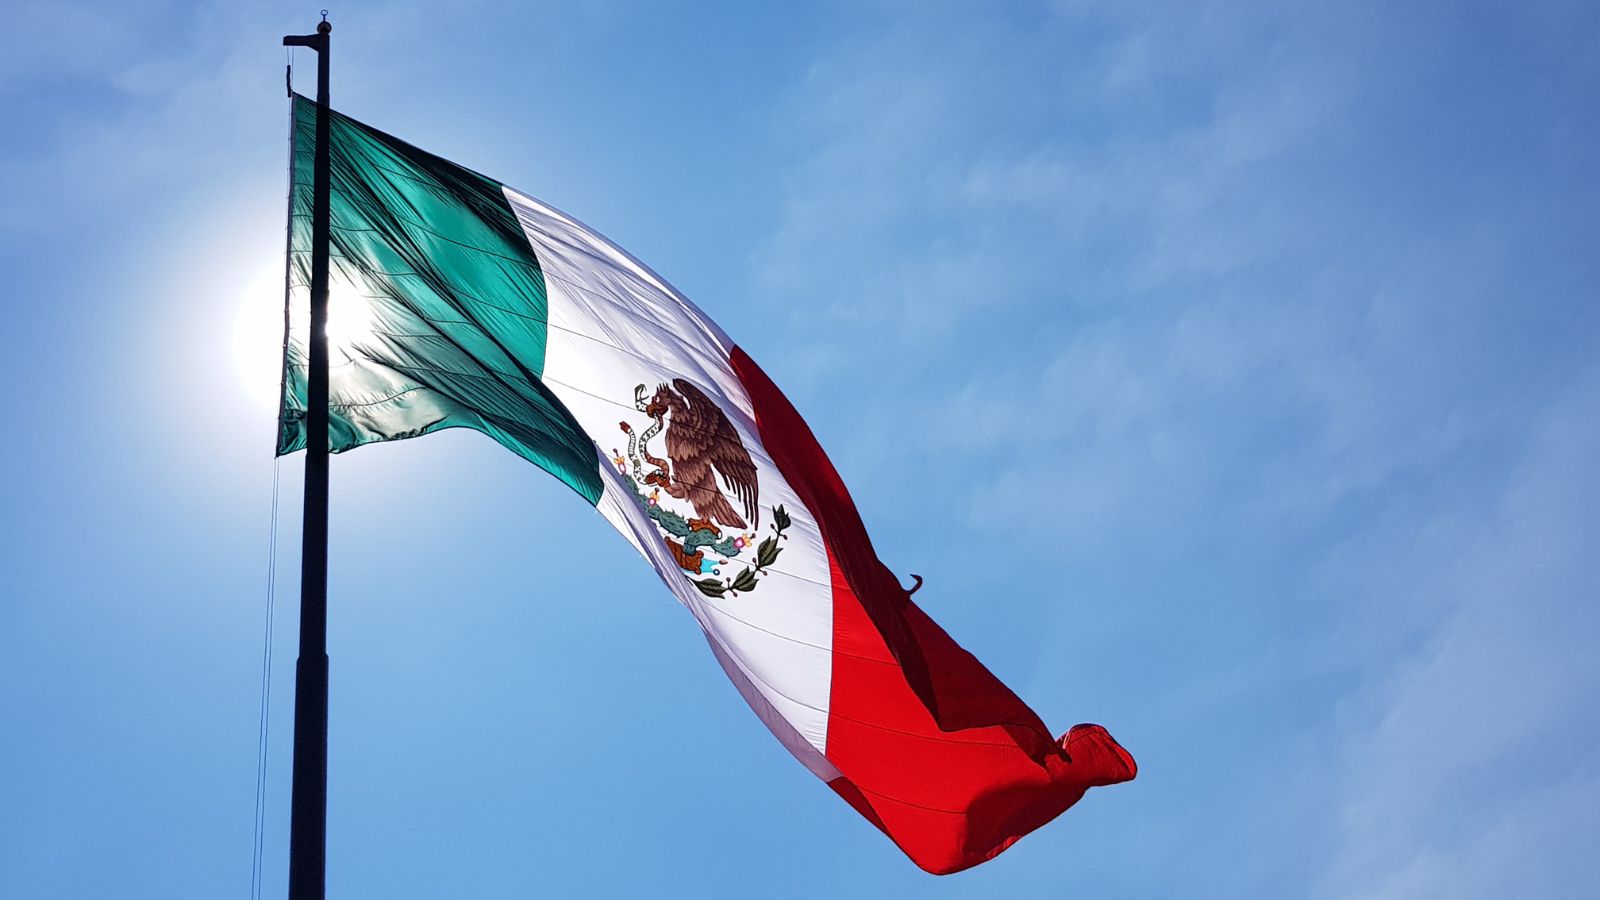 Mexico Too Risky For Spring Break - Texas Officials Say